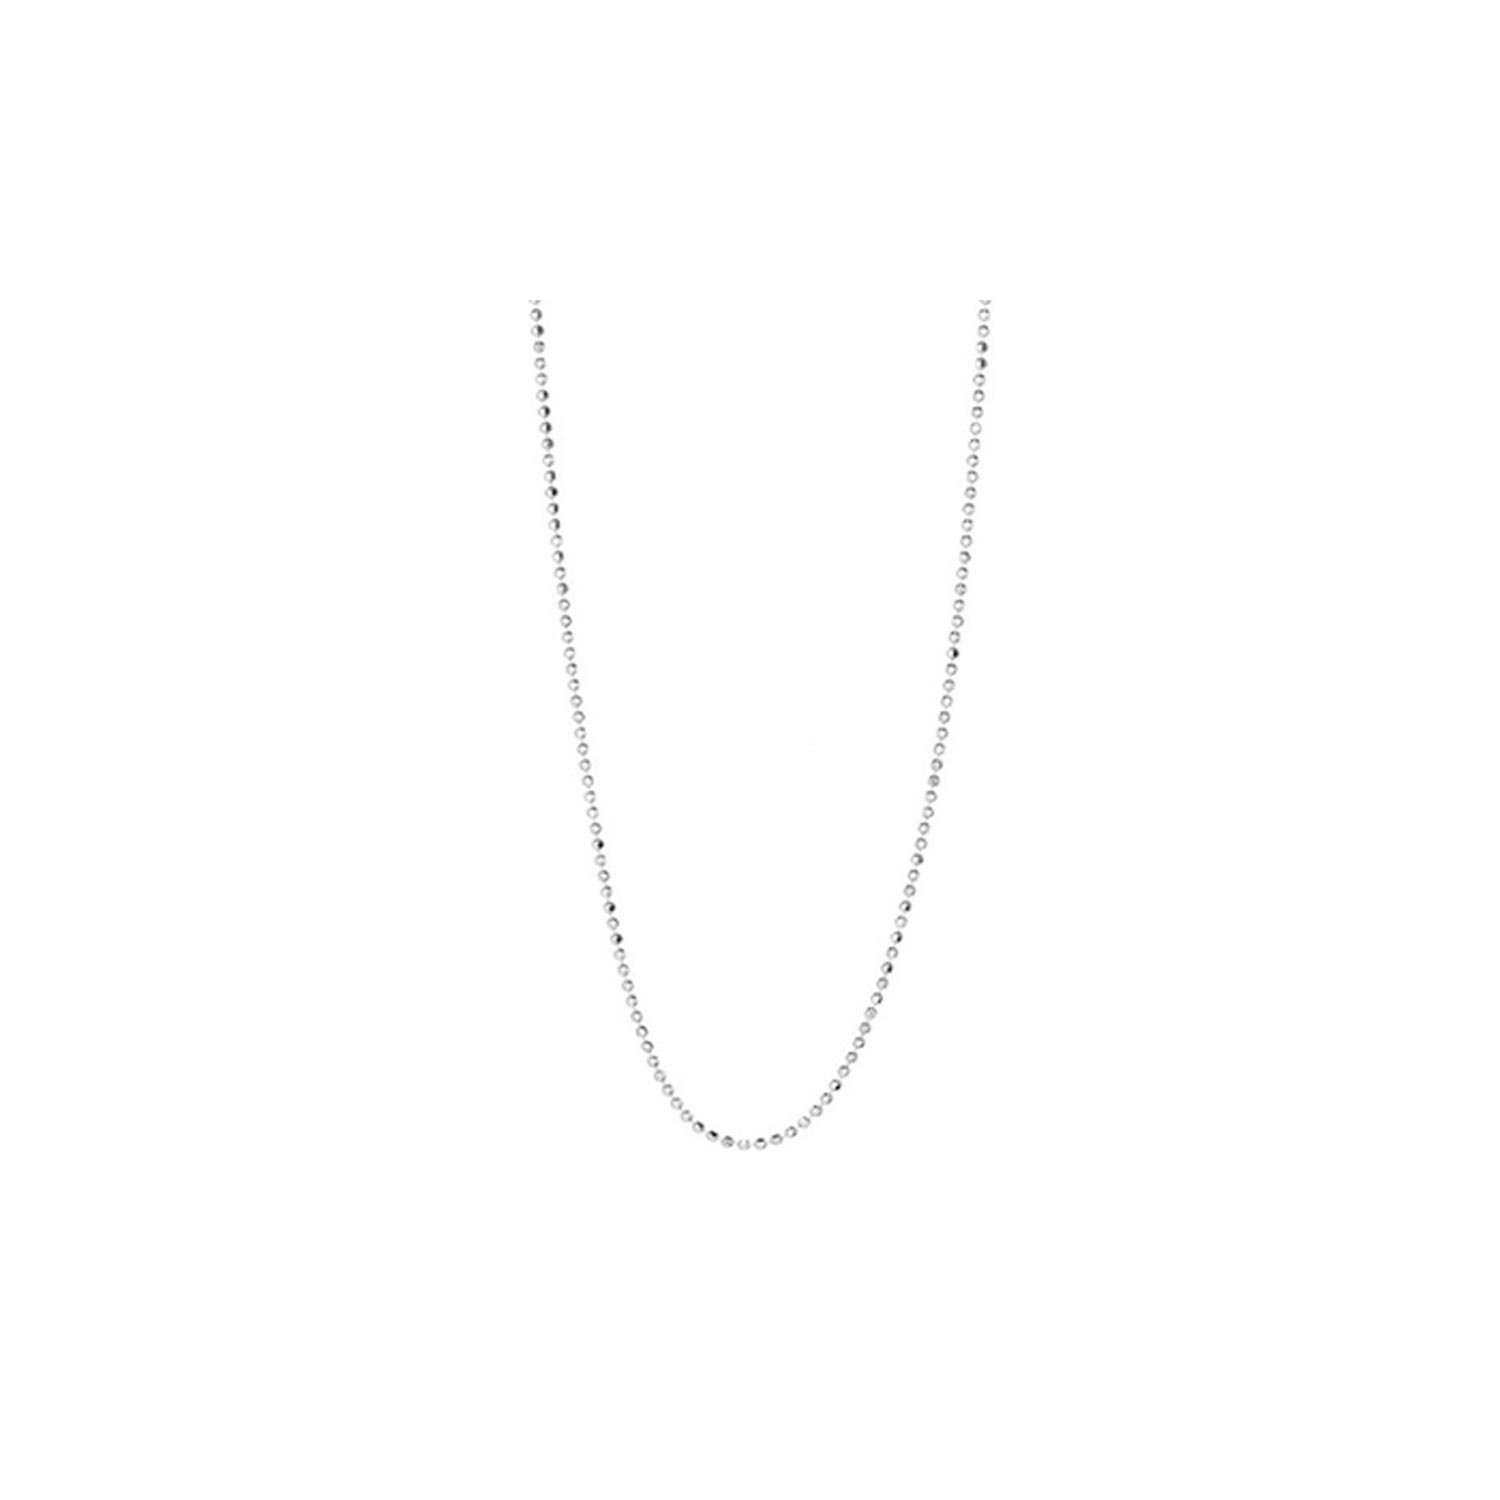 Italian Sterling Silver Diamond-cut Bead Chain Necklace